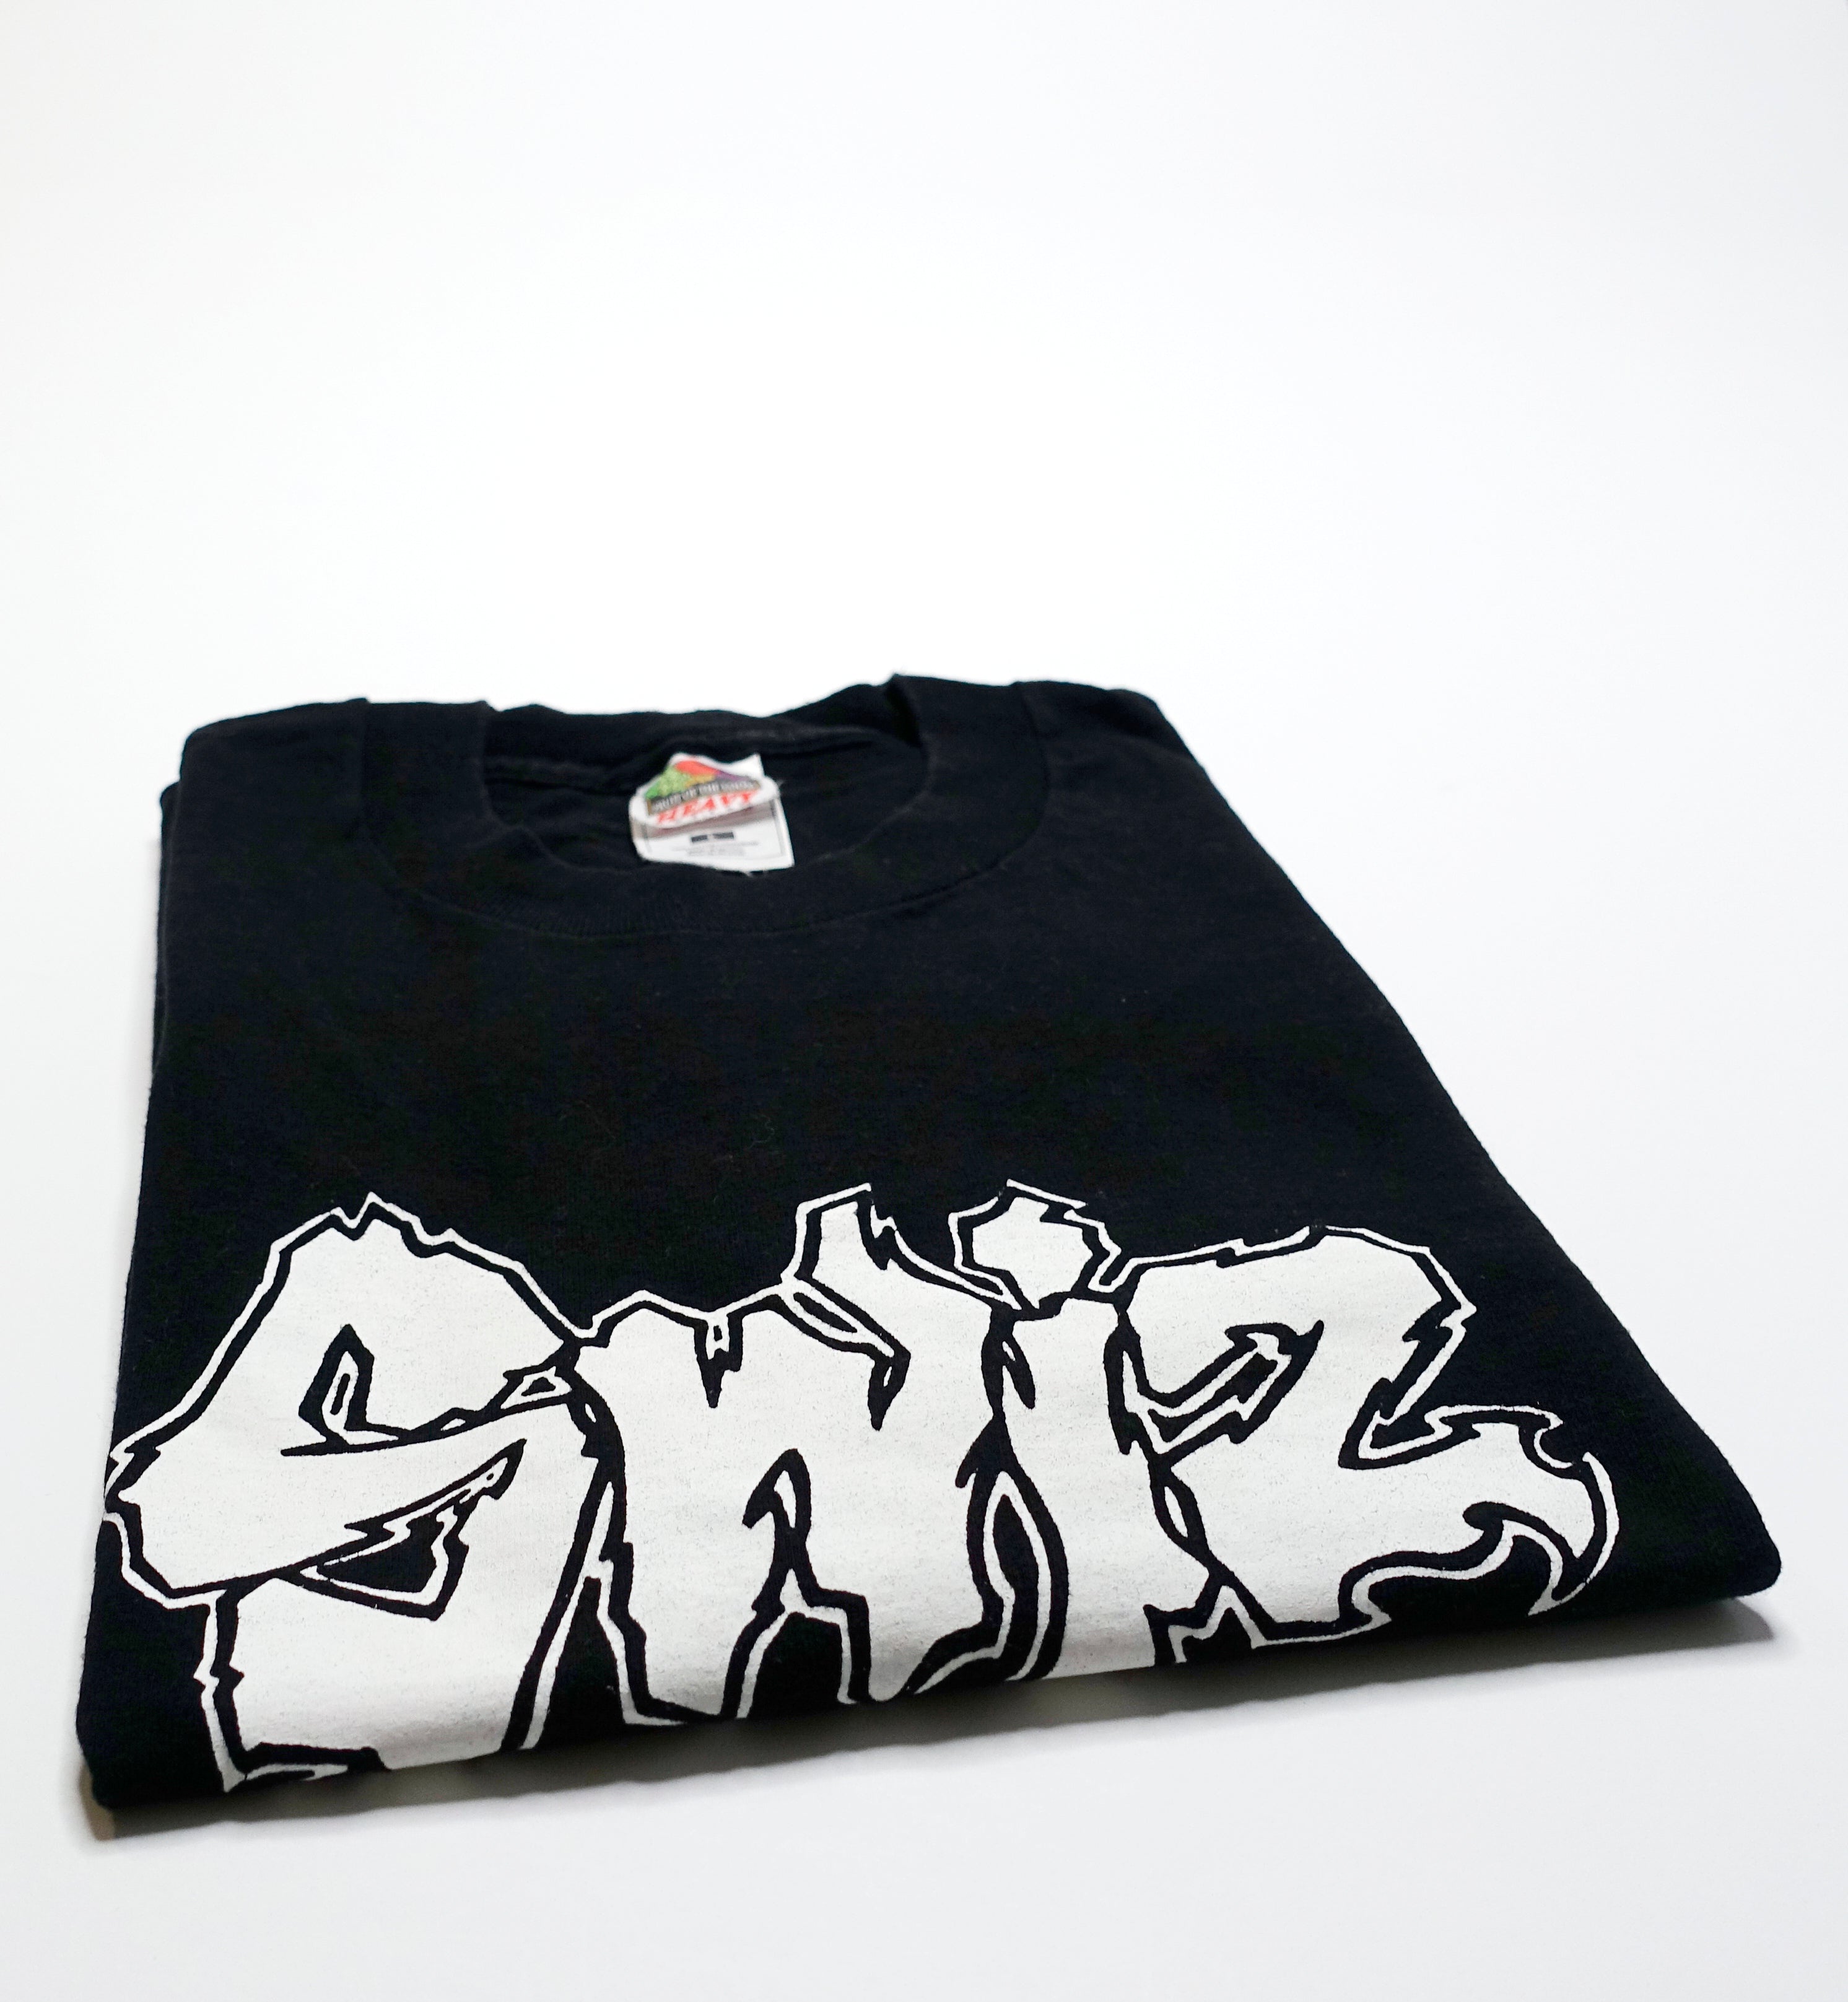 Swiz - Logo Shirt 90's Tour Shirt Size Large